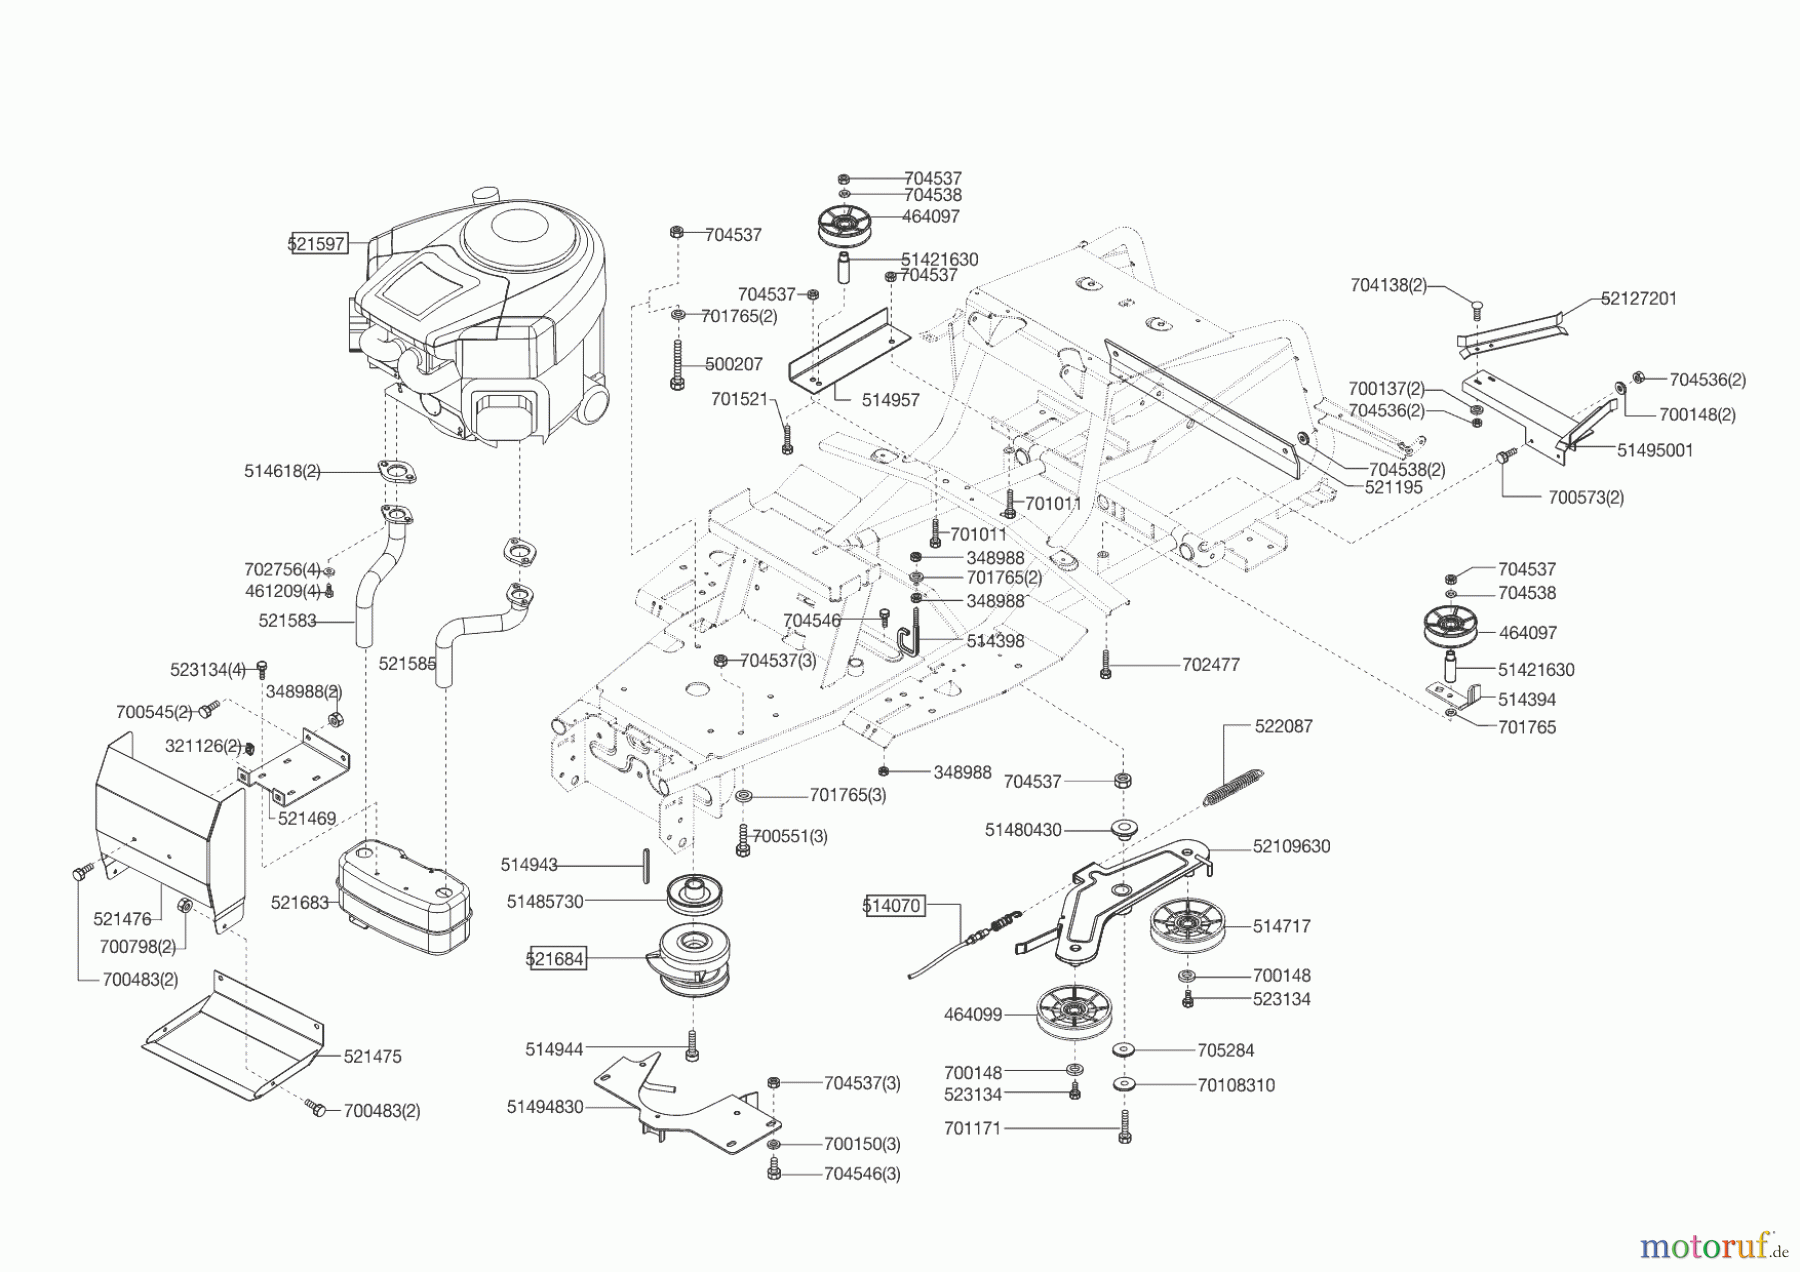  AL-KO Gartentechnik Rasentraktor T 20-102 HD Gulistan  ab 03/2015 Seite 4